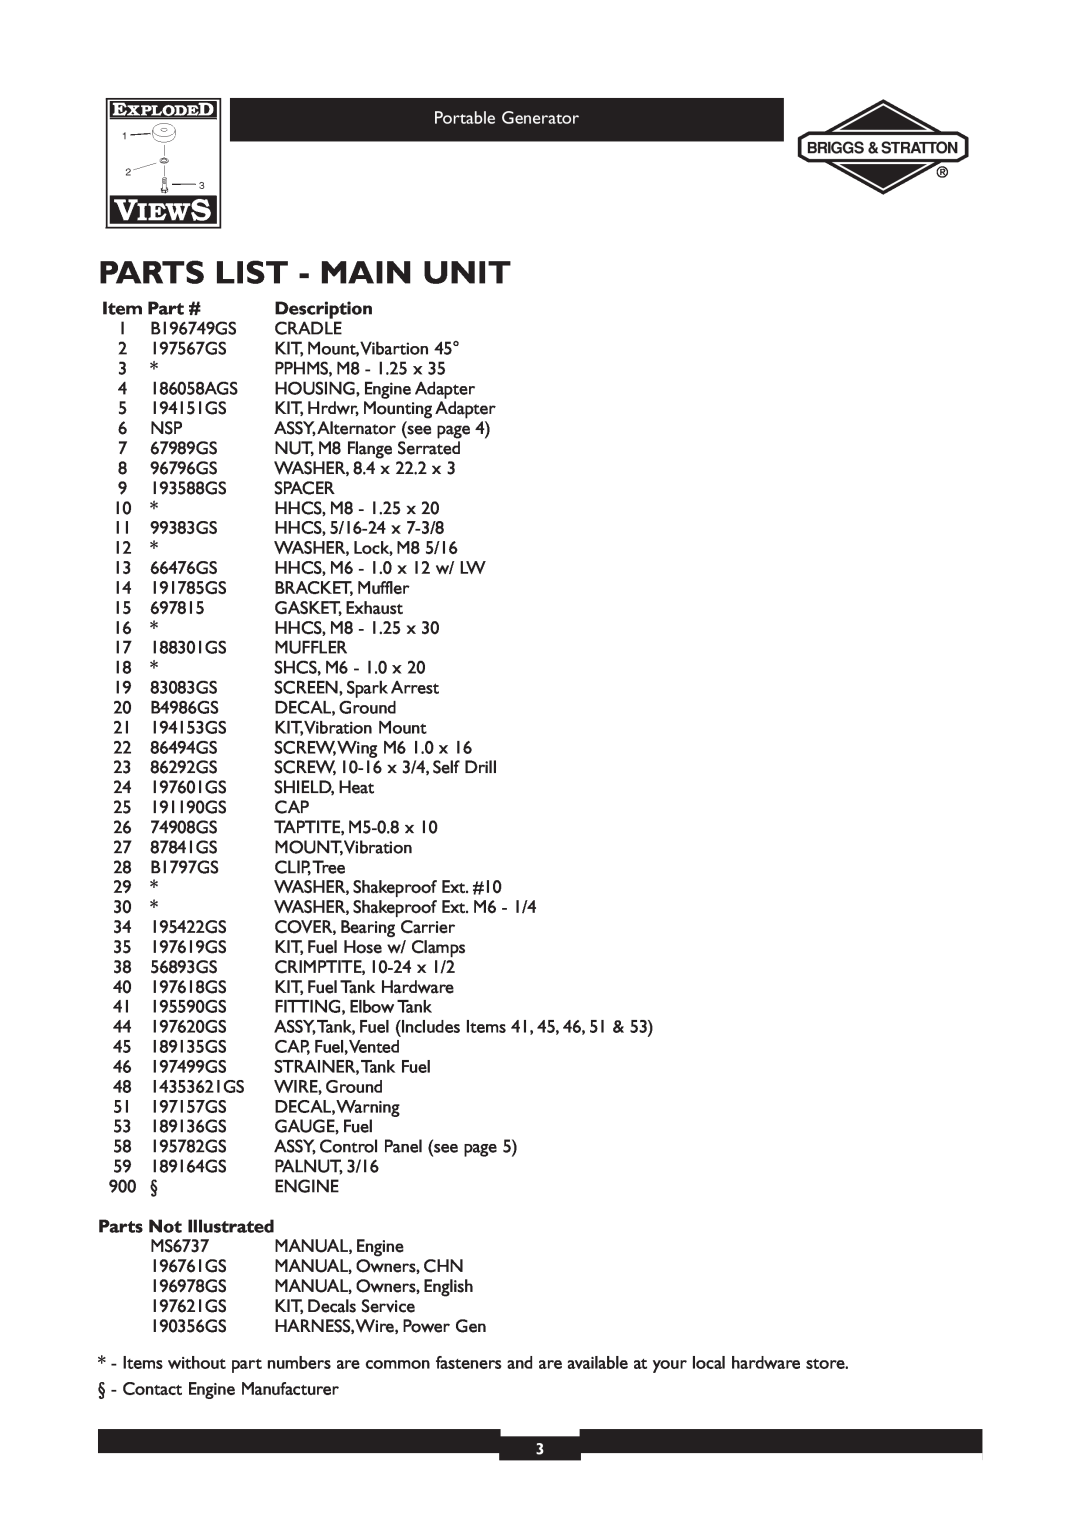 Briggs & Stratton 30213 Parts List - Main Unit, Description, Parts Not Illustrated, Portable Generator 